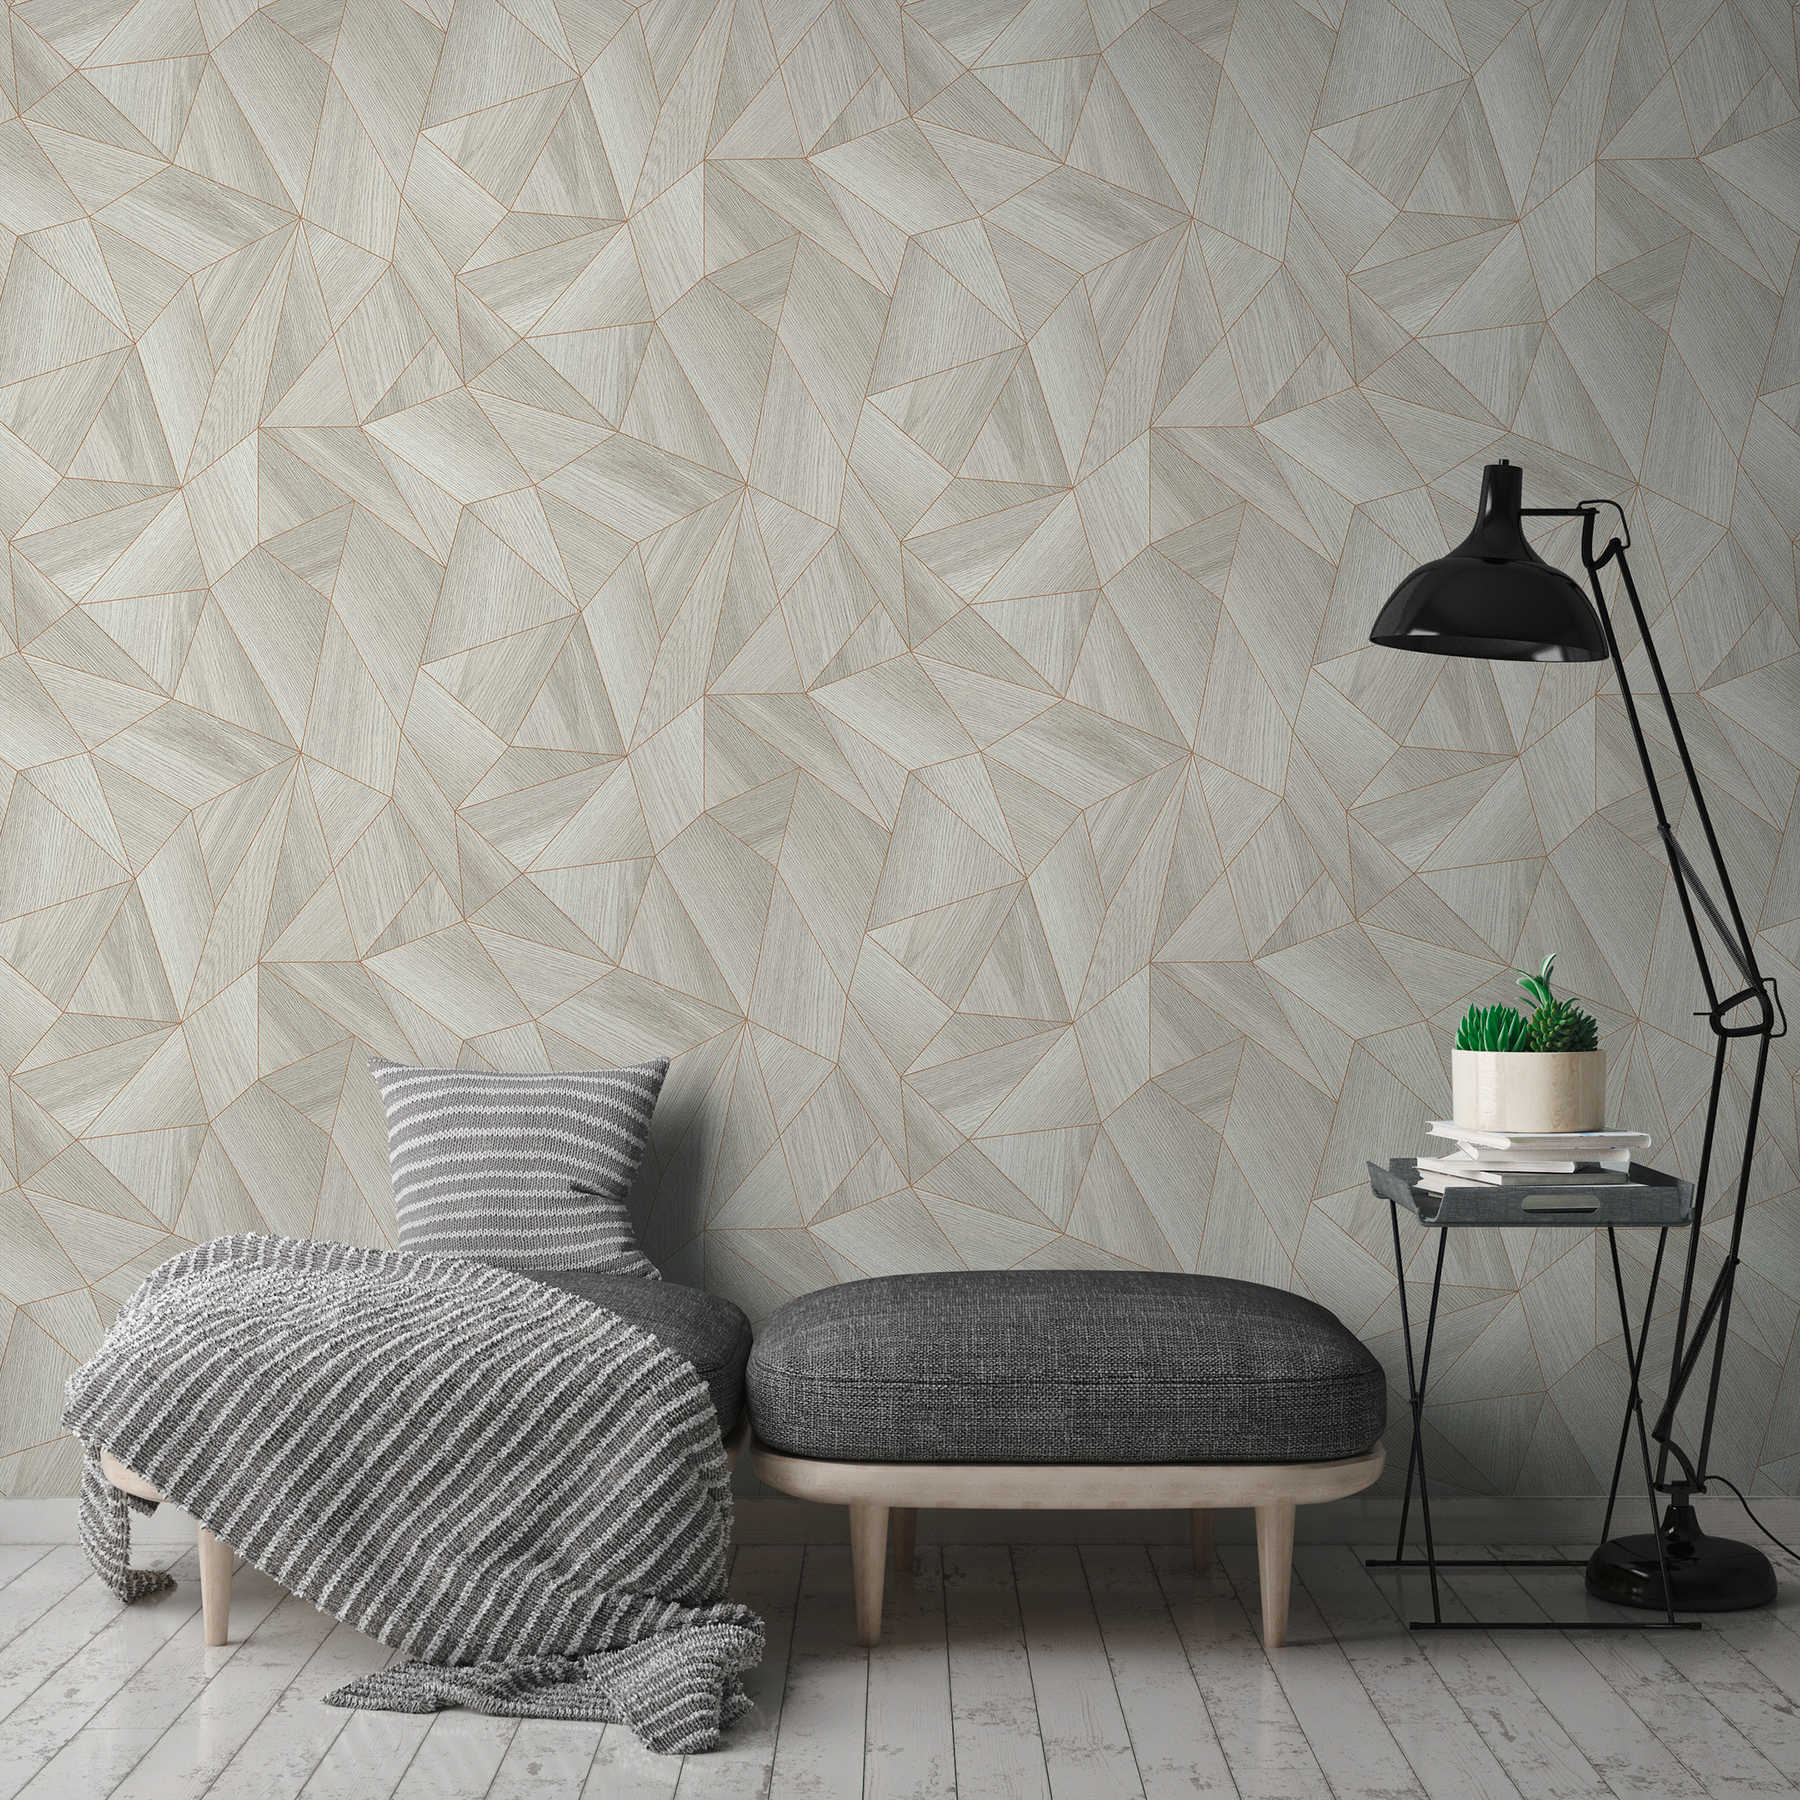             Wood look wallpaper modern design & metallic effect - grey, gold
        